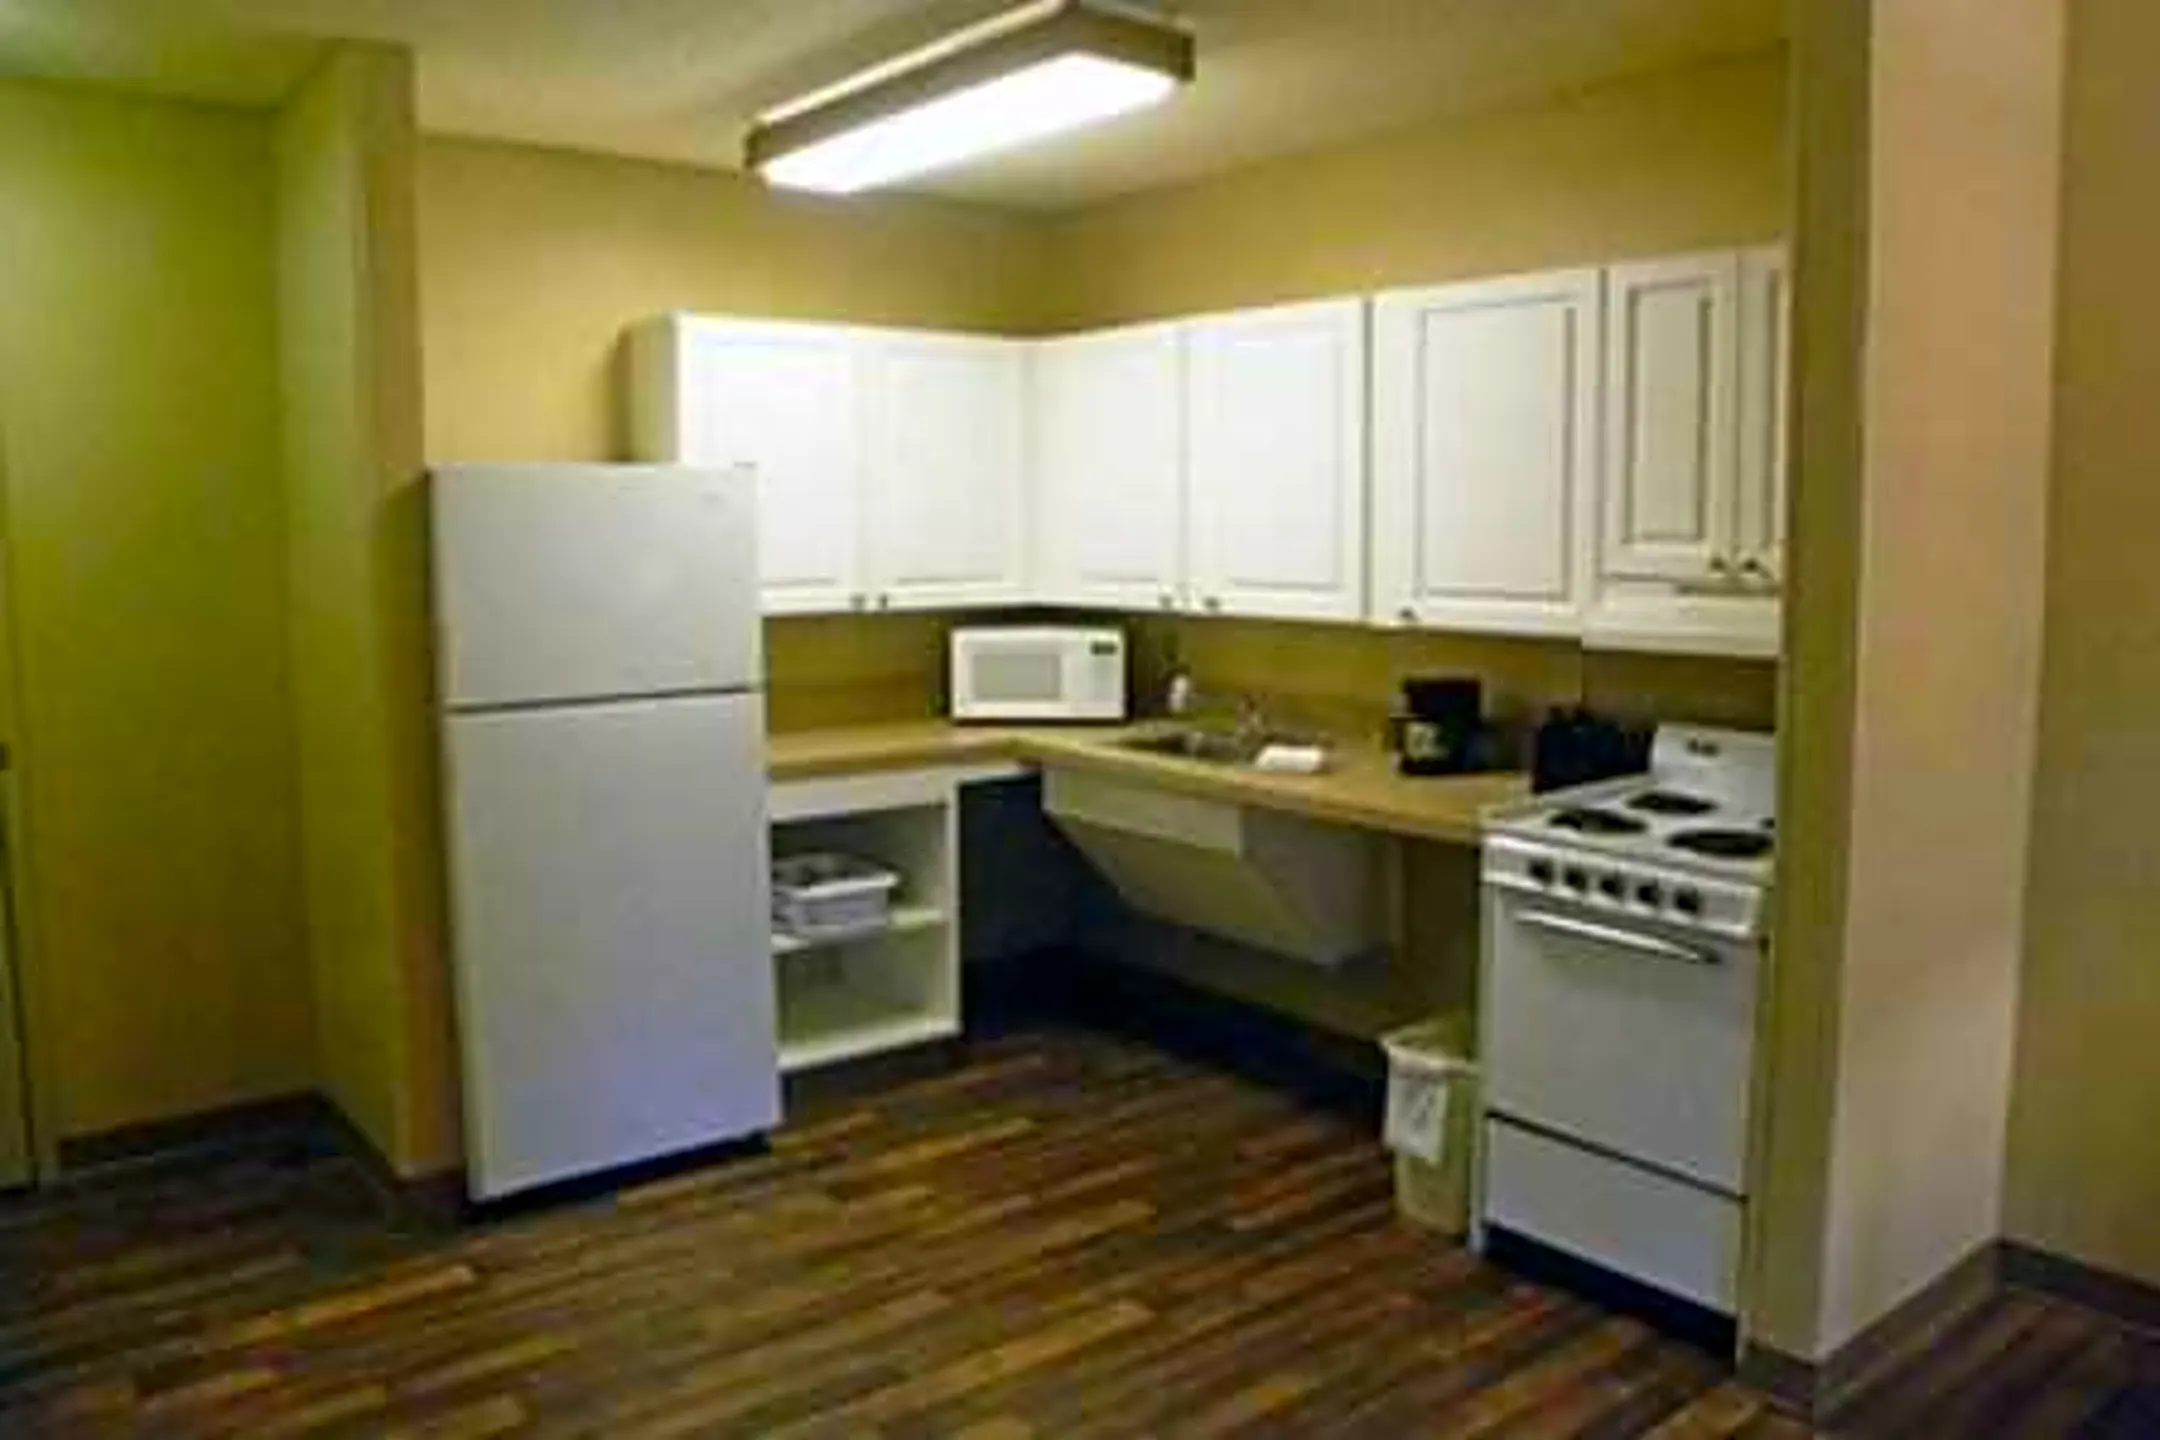 Kitchen - Furnished Studio - Houston - I-45 North - Houston, TX